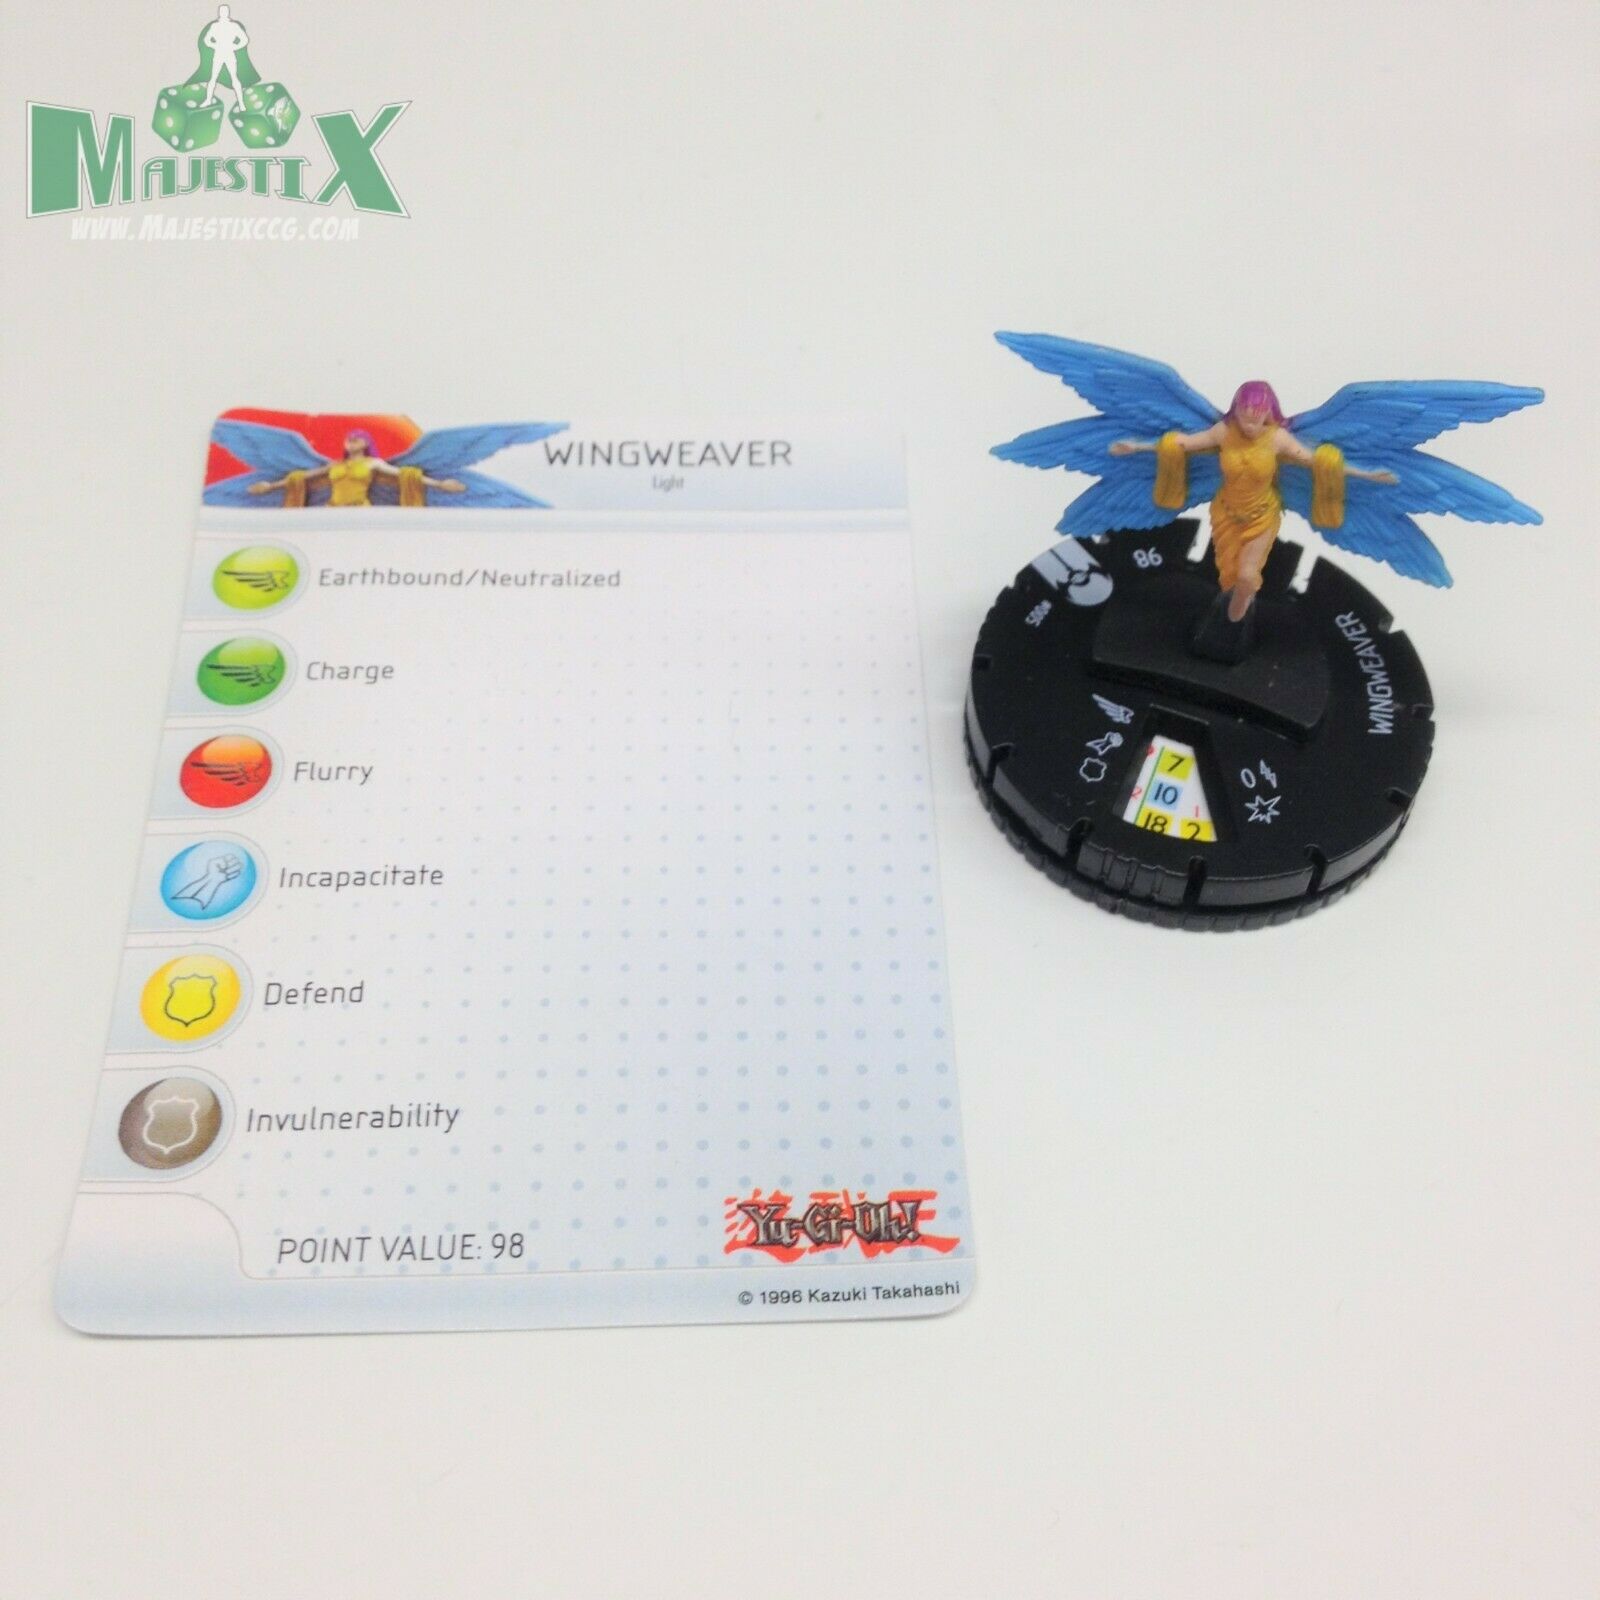 Heroclix Yu-gi-oh! Series 3 Set Wingweaver #005 Common Figure W/card!